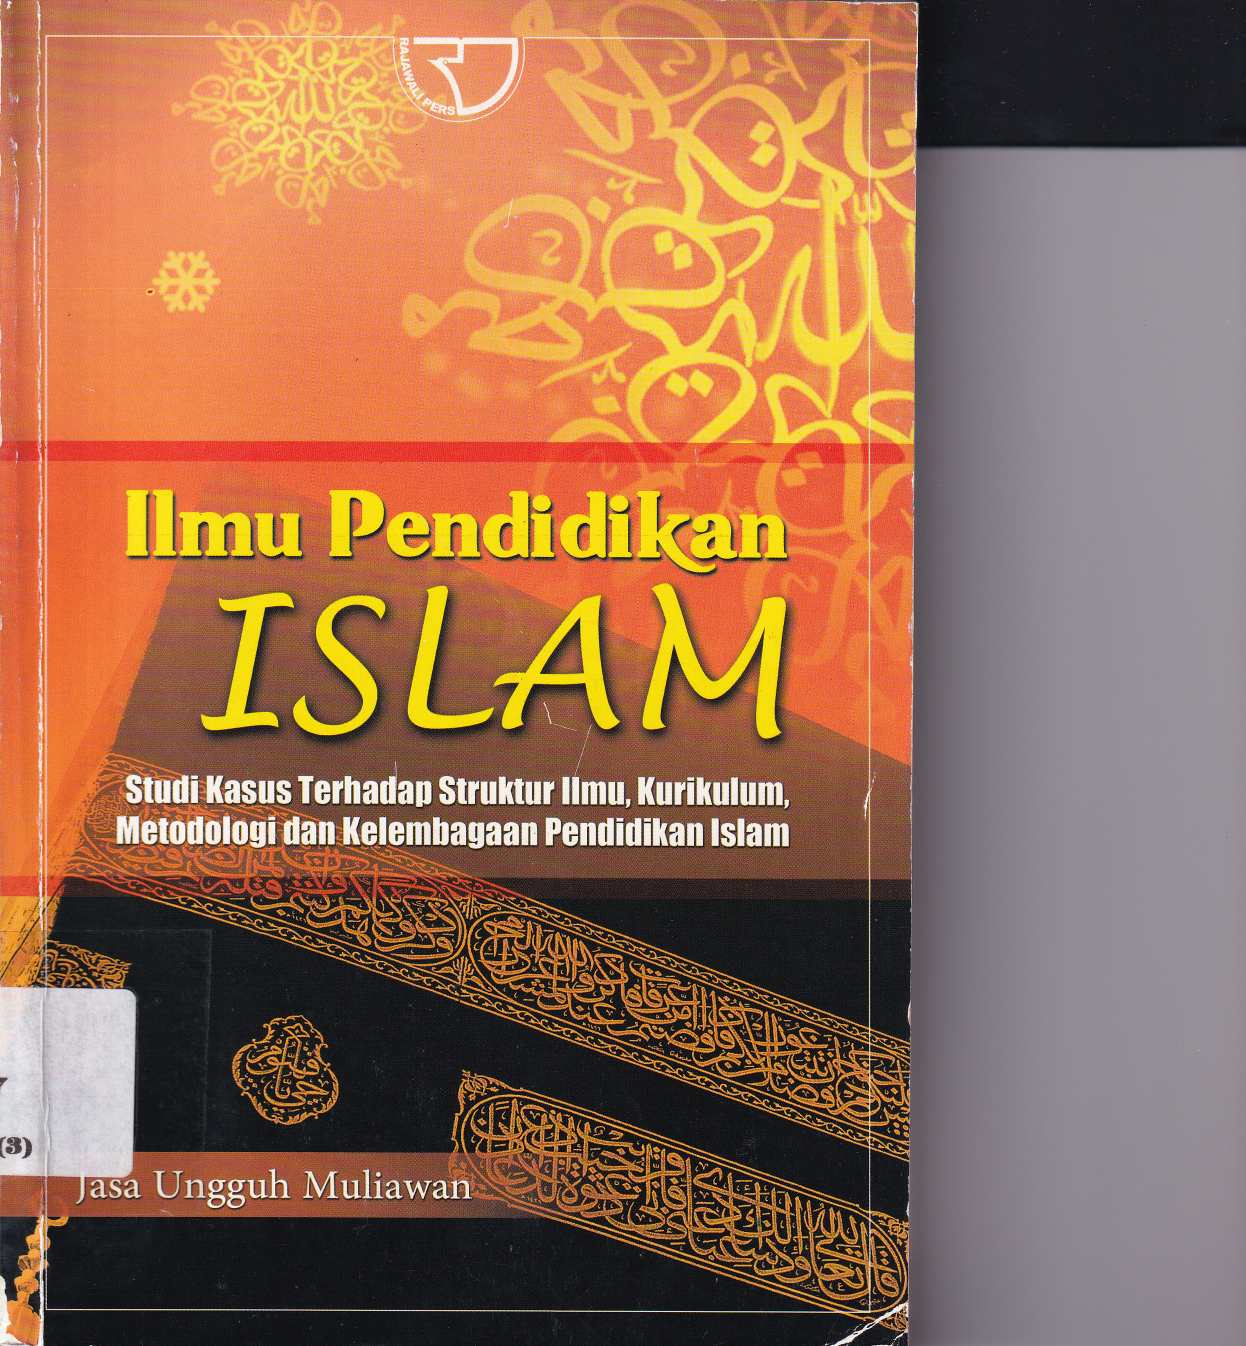 Ilmu Pendidikan Islam: Studi Kasus Terhadap Struktur Ilmu, Kurikulum, Metodologi dan Kelembagaan Pendidikan Islam